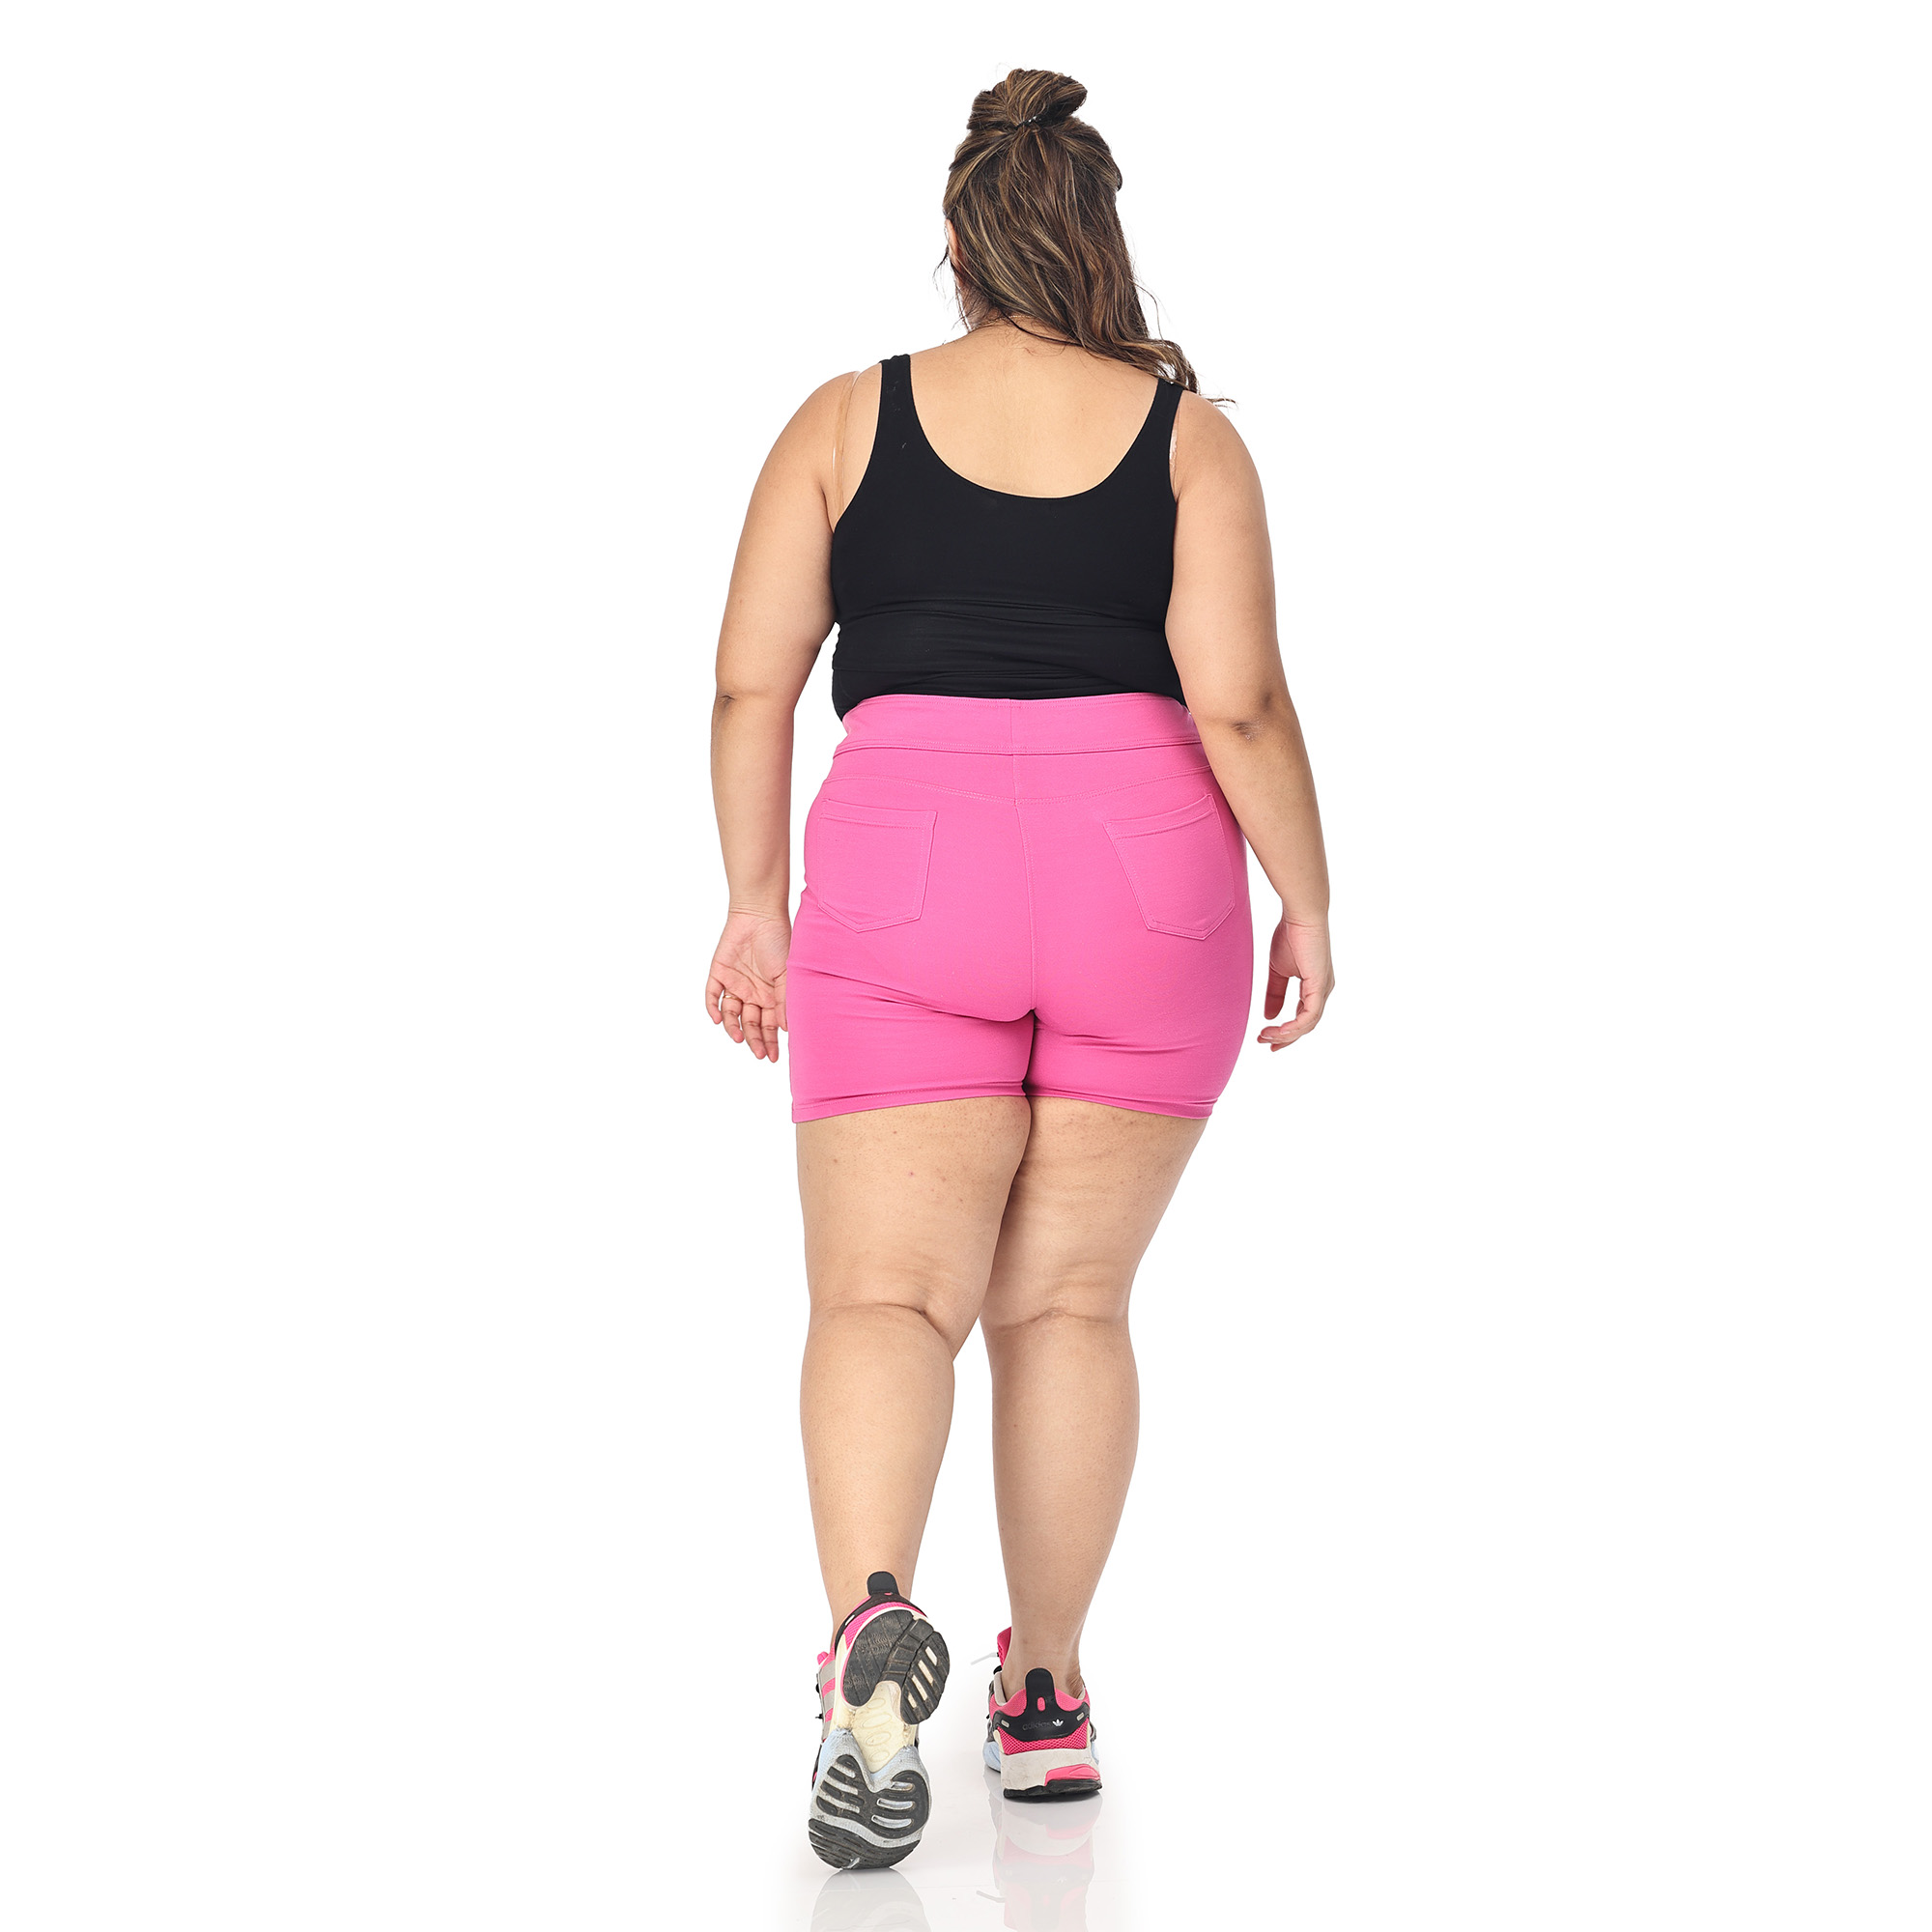 Pink shorts for women - Active shape wear-2 back pockets - Belore Slims